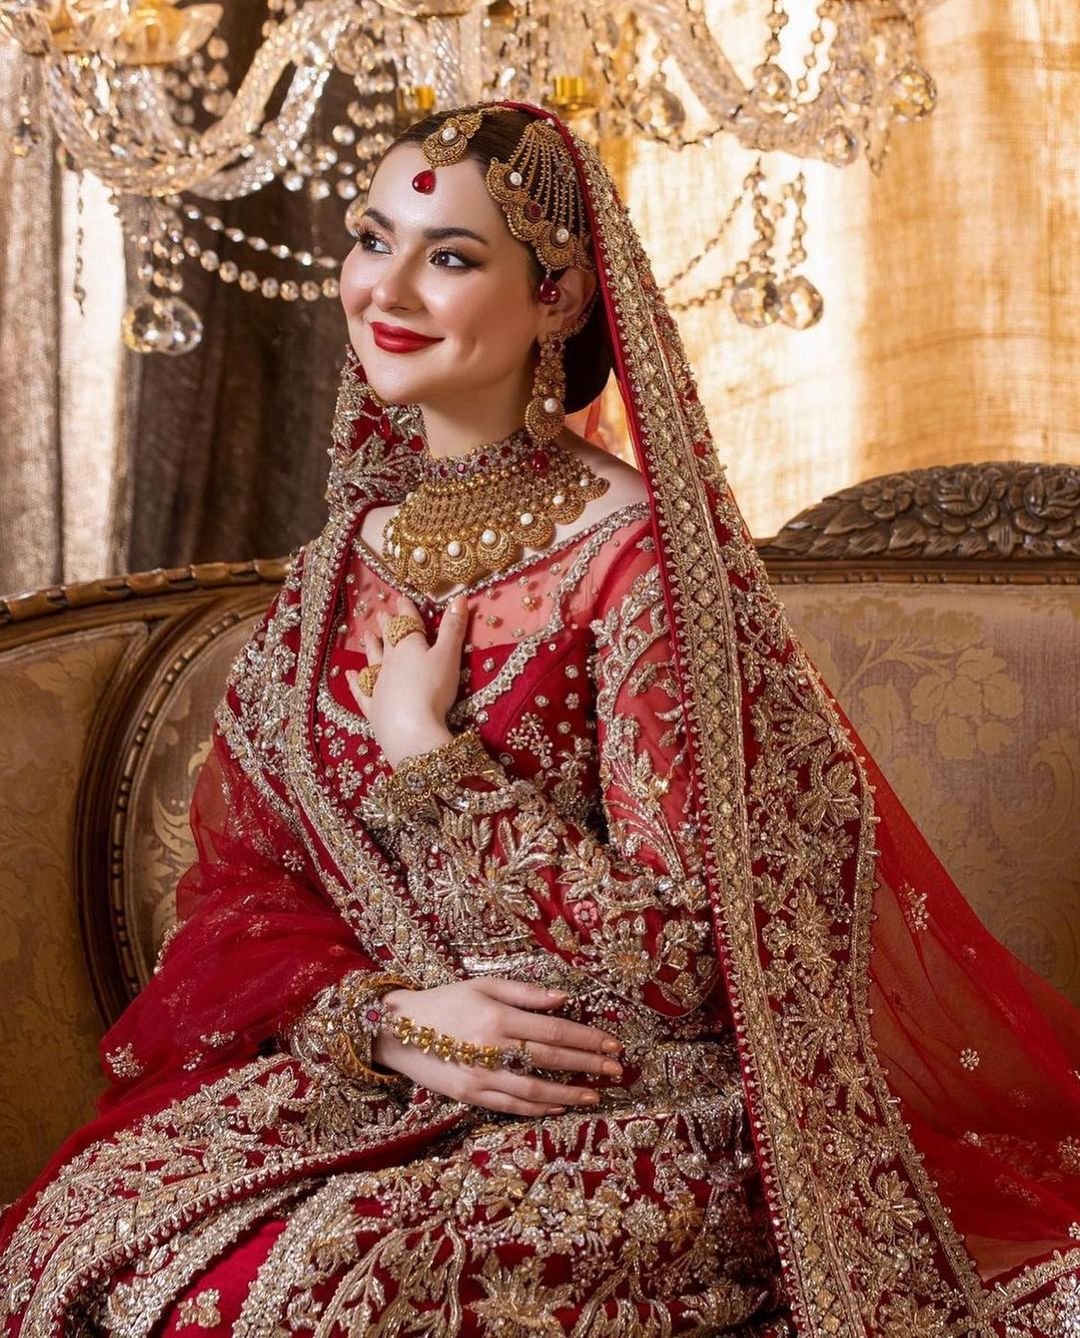 Hania Aamir Flaunts Elegance in Traditional Red Bridal attire